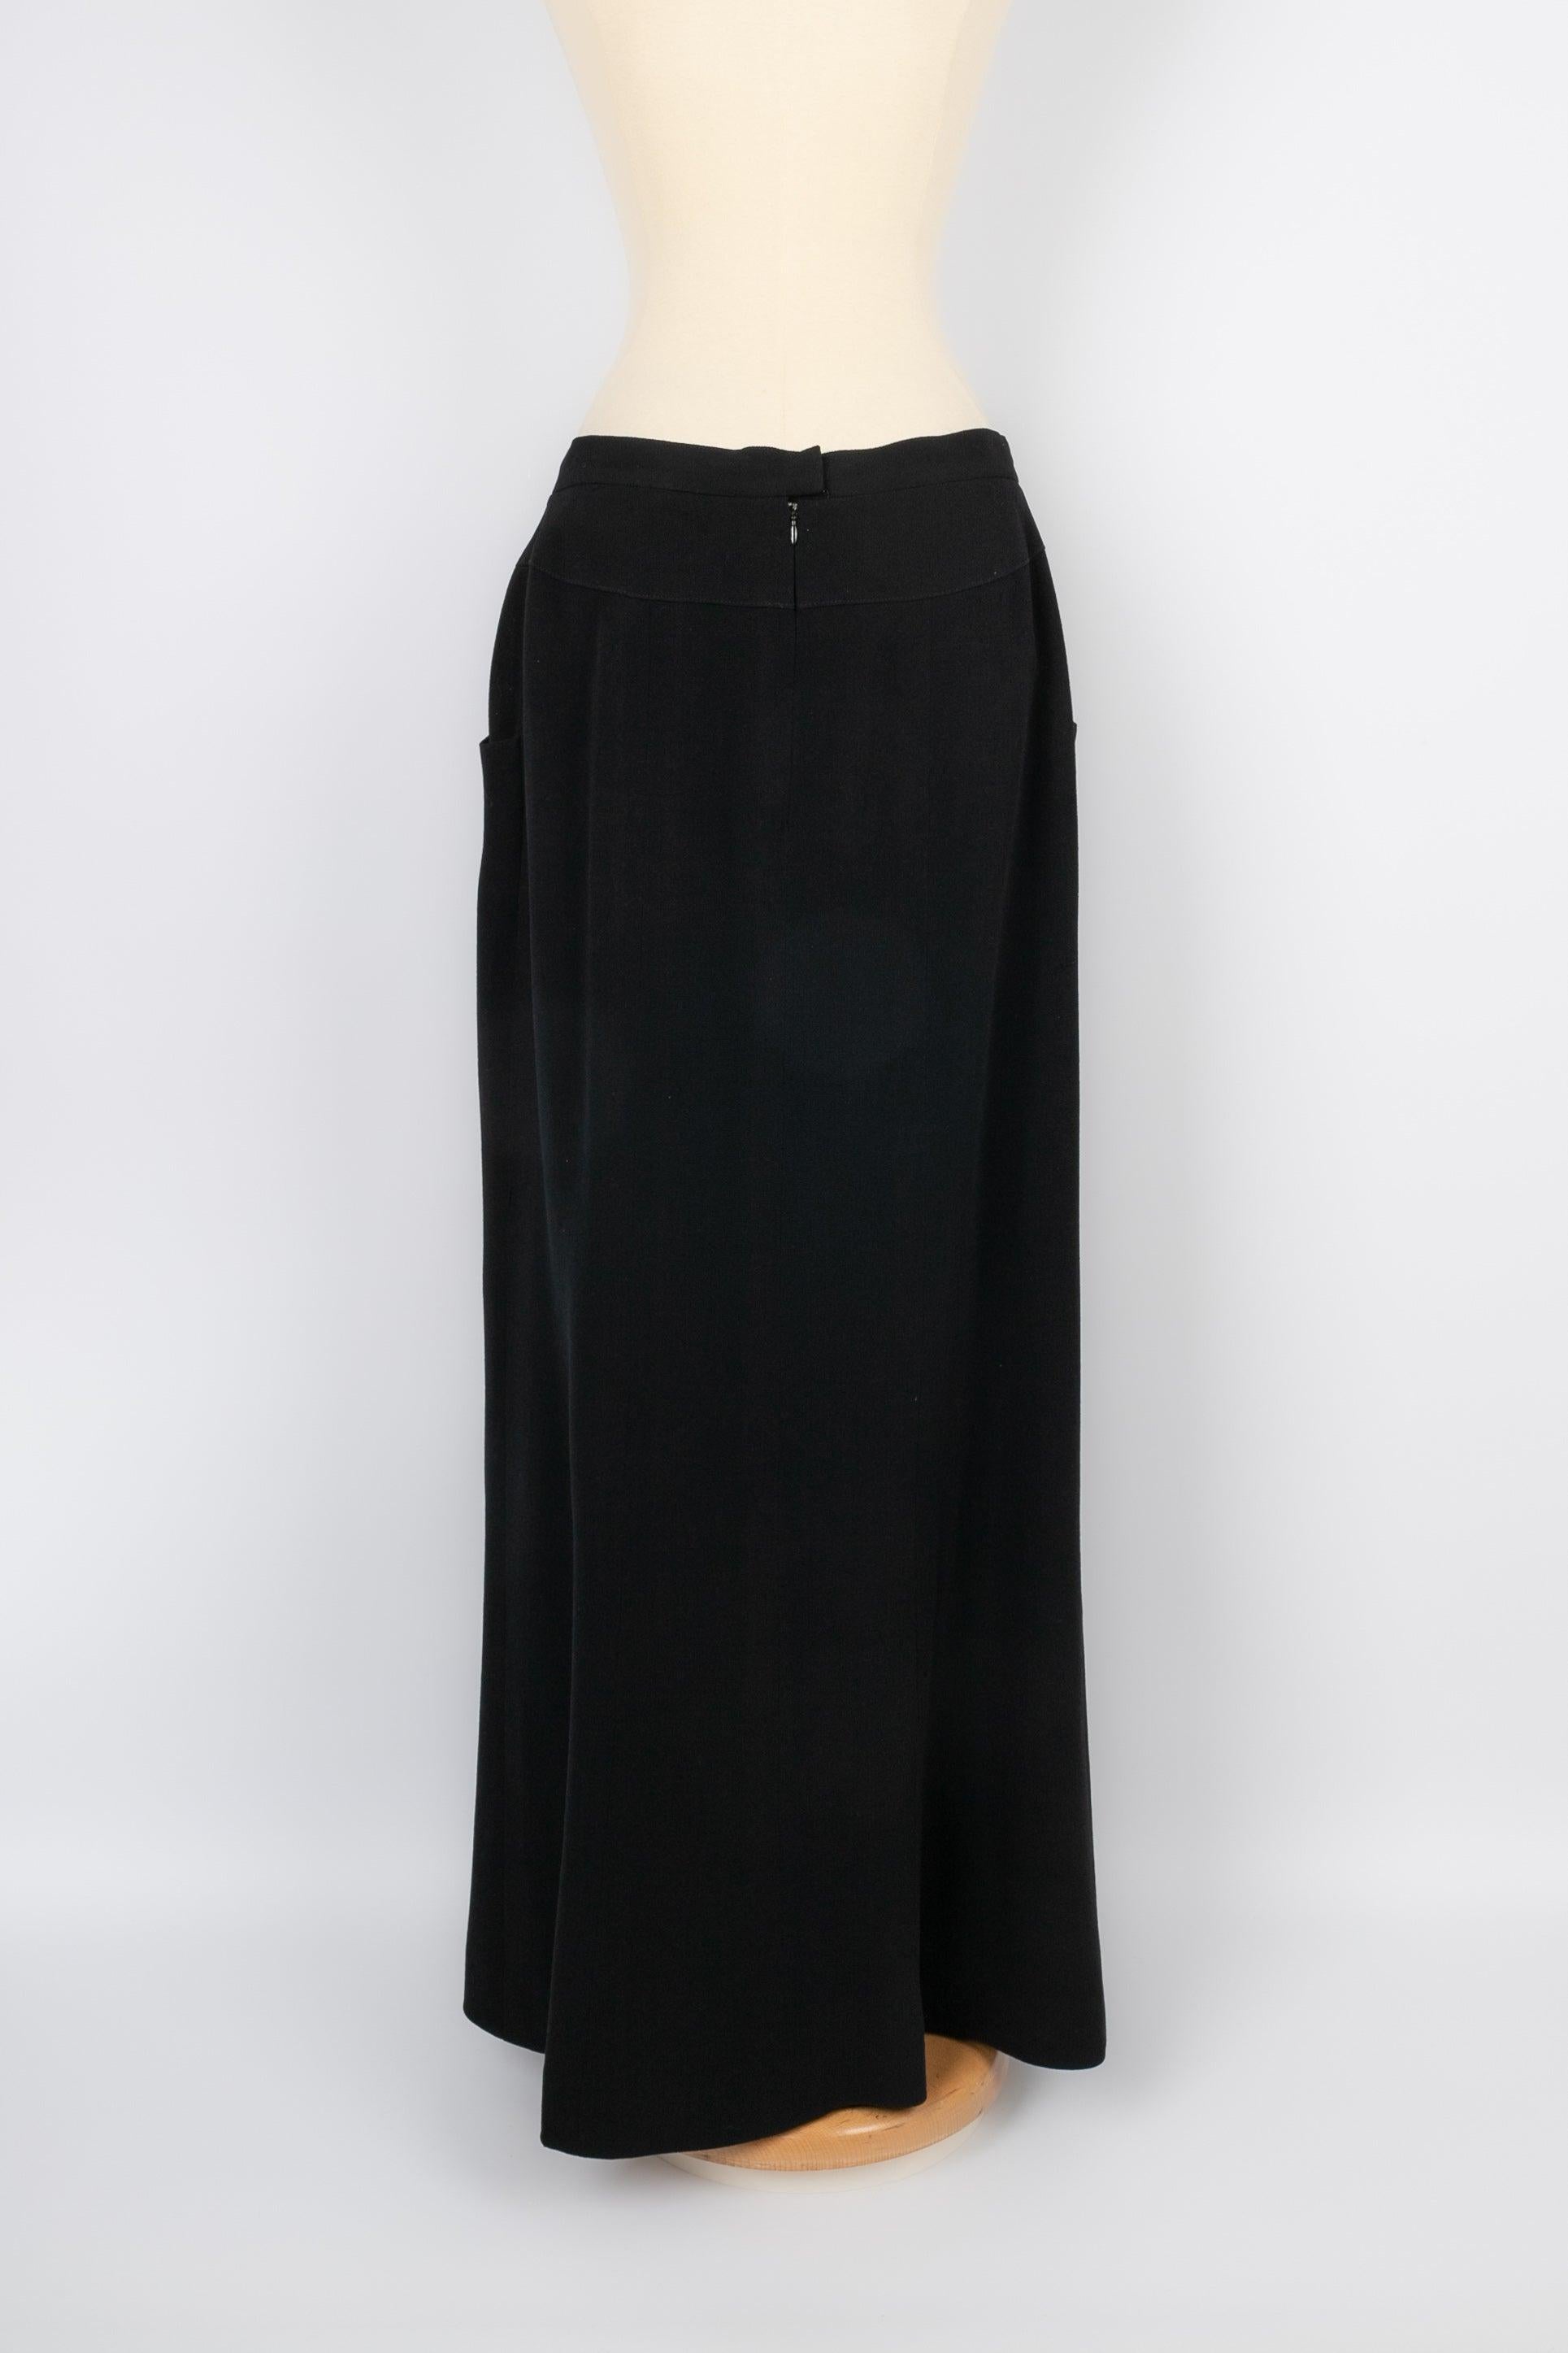 Chanel Black Wool Long Skirt, 1996 In Excellent Condition For Sale In SAINT-OUEN-SUR-SEINE, FR